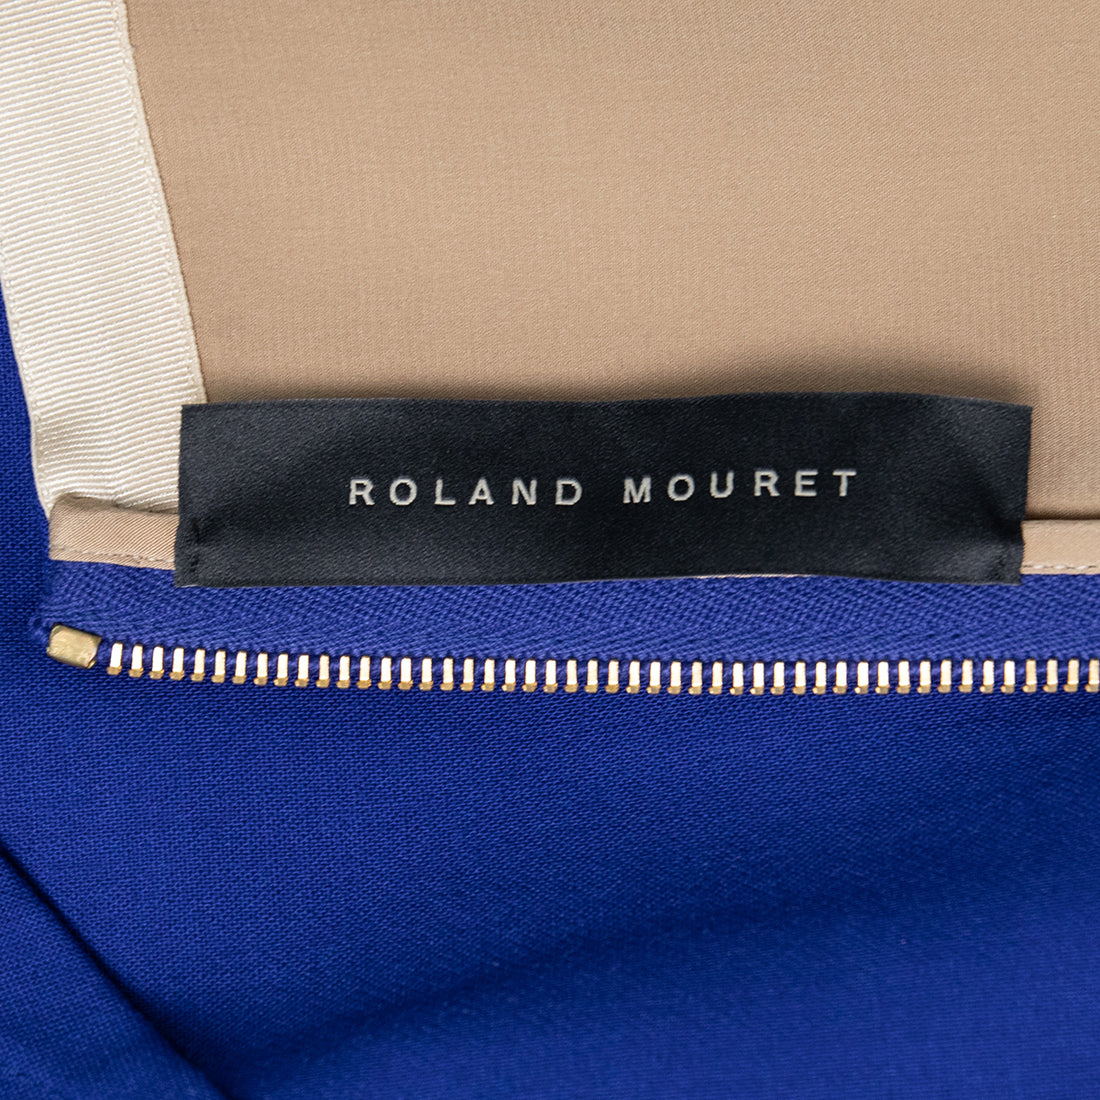 Roland Mouret bustier dress "Electra"